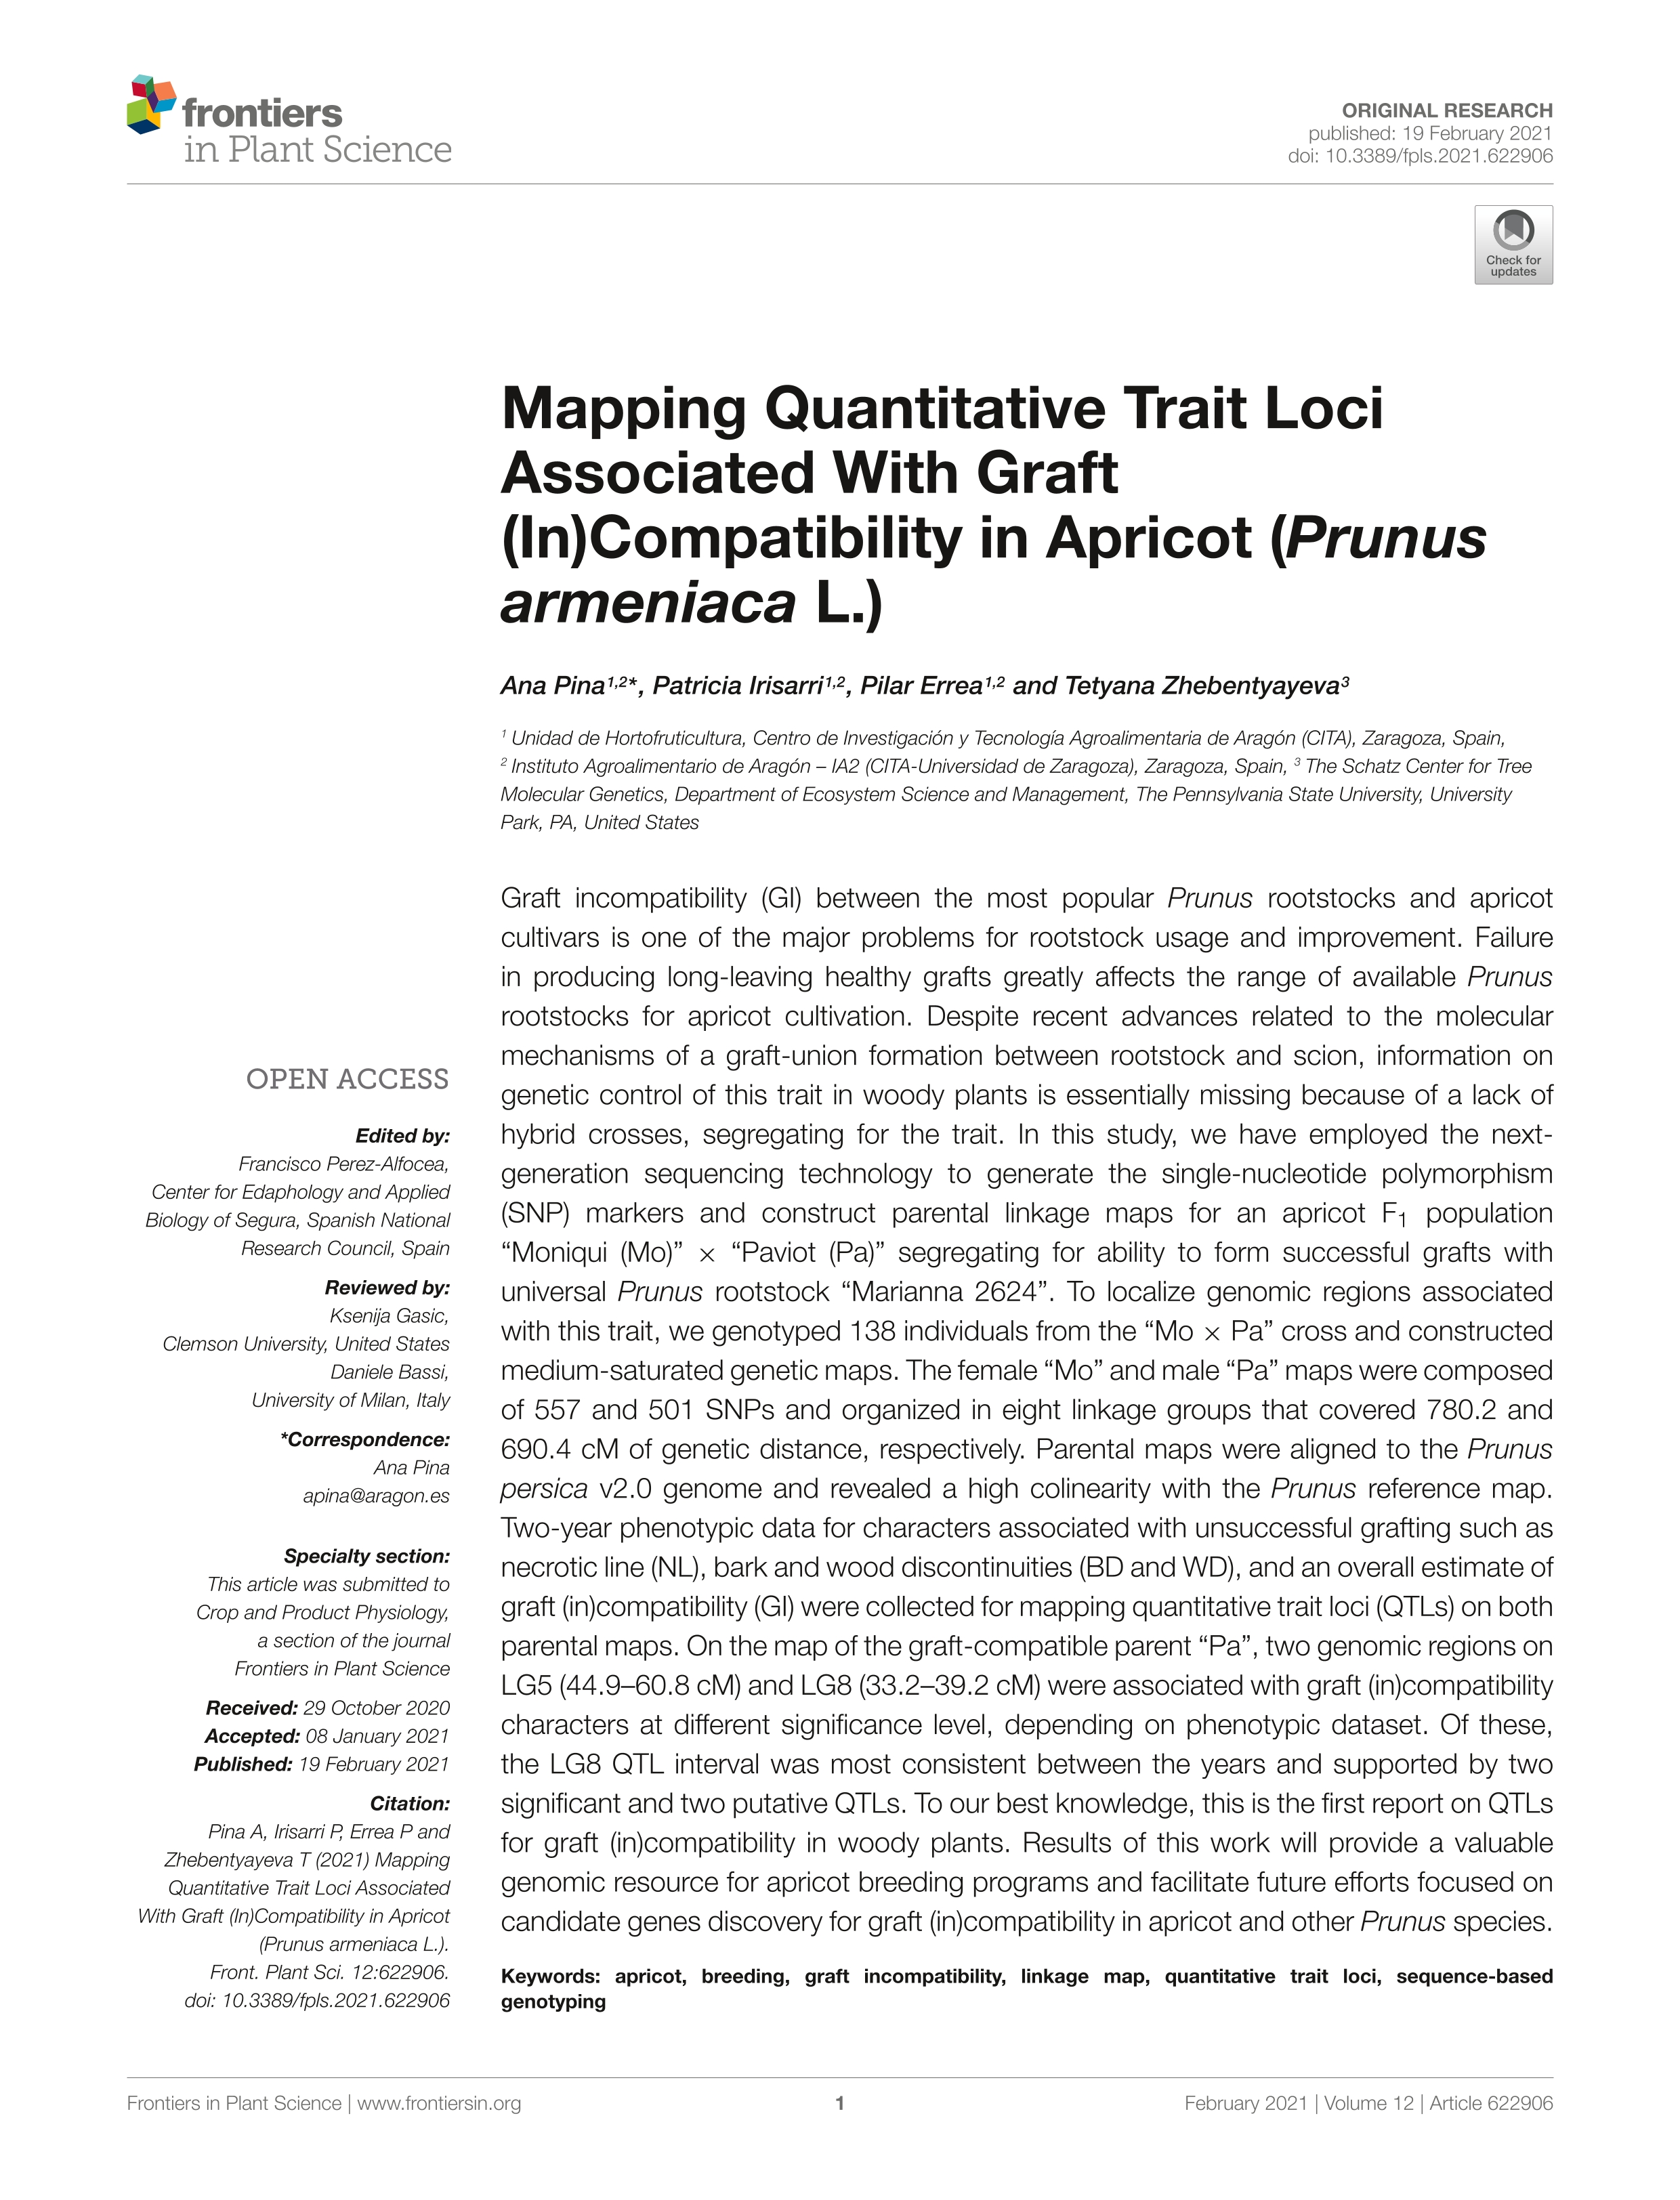 Mapping quantitative trait Loci associated with graft (In)compatibility in apricot (Prunus armeniaca L.)